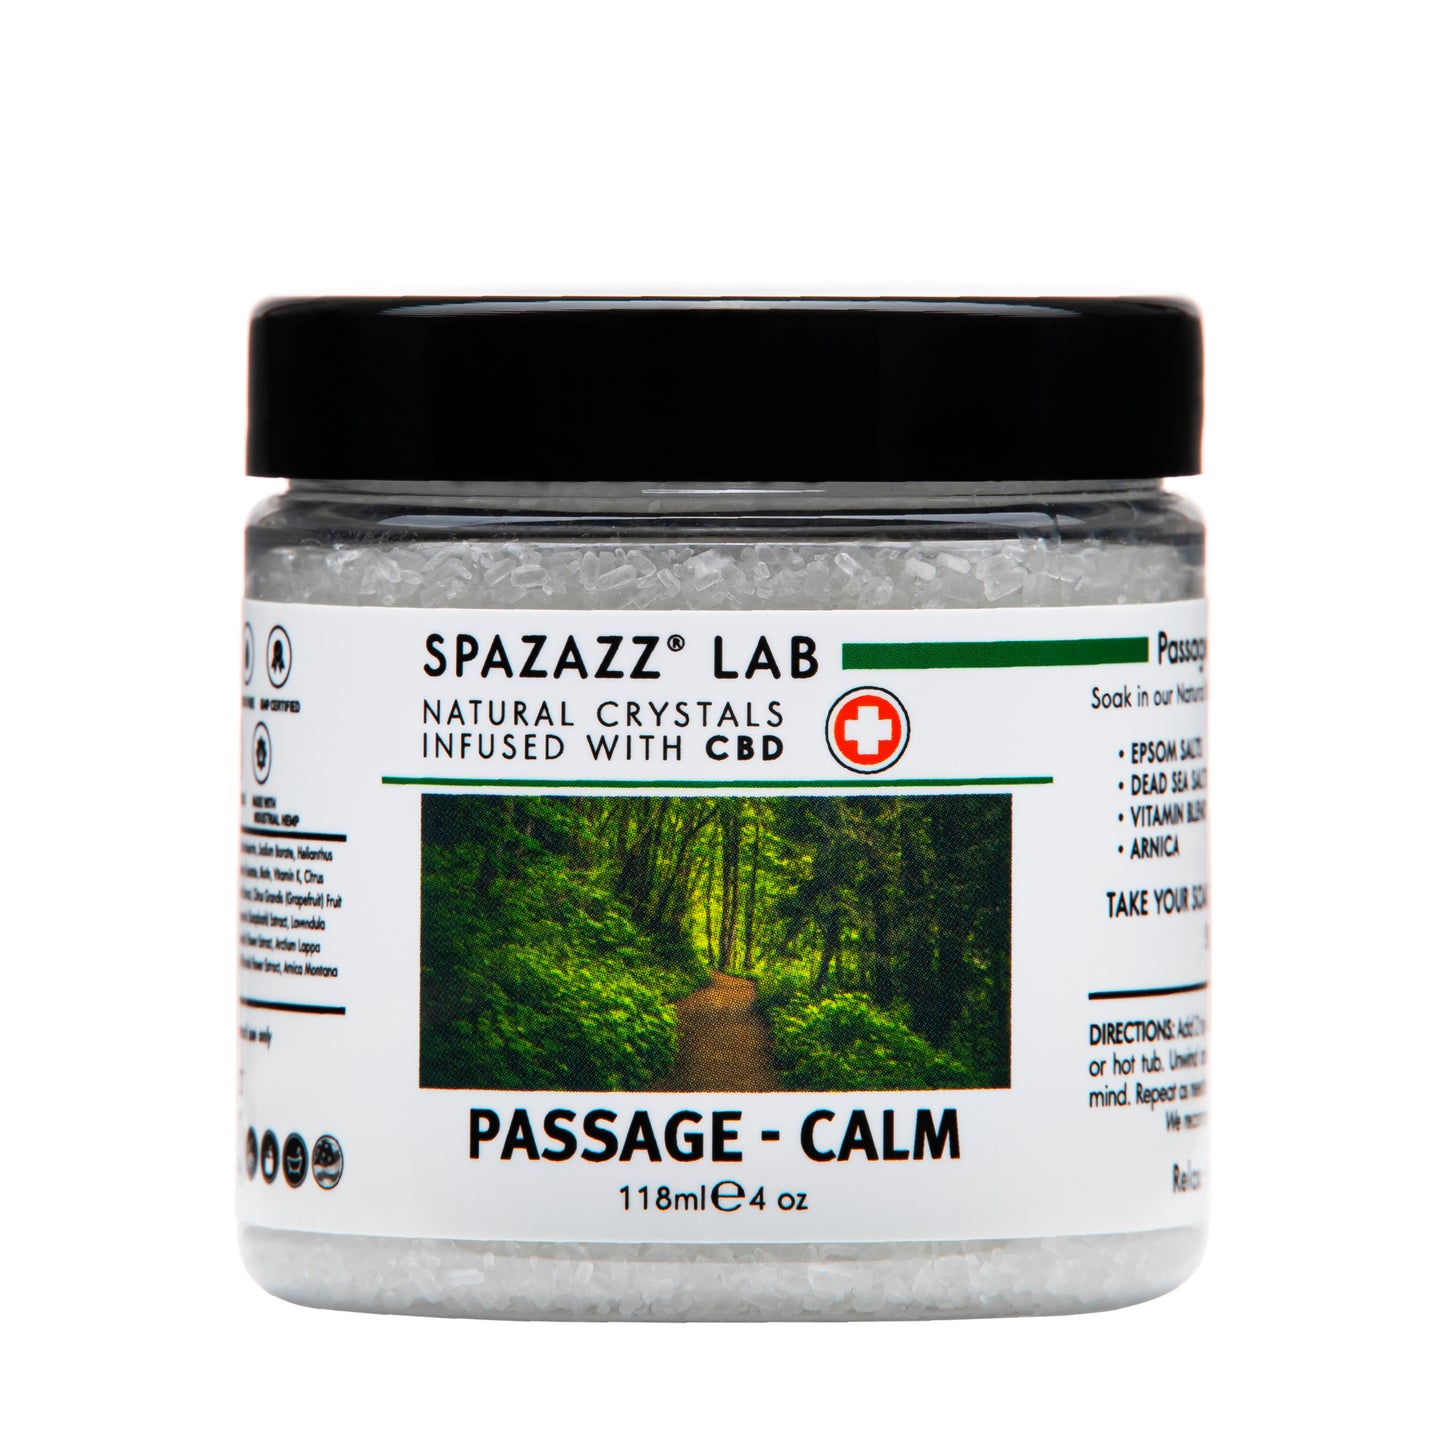 Passage - Calm